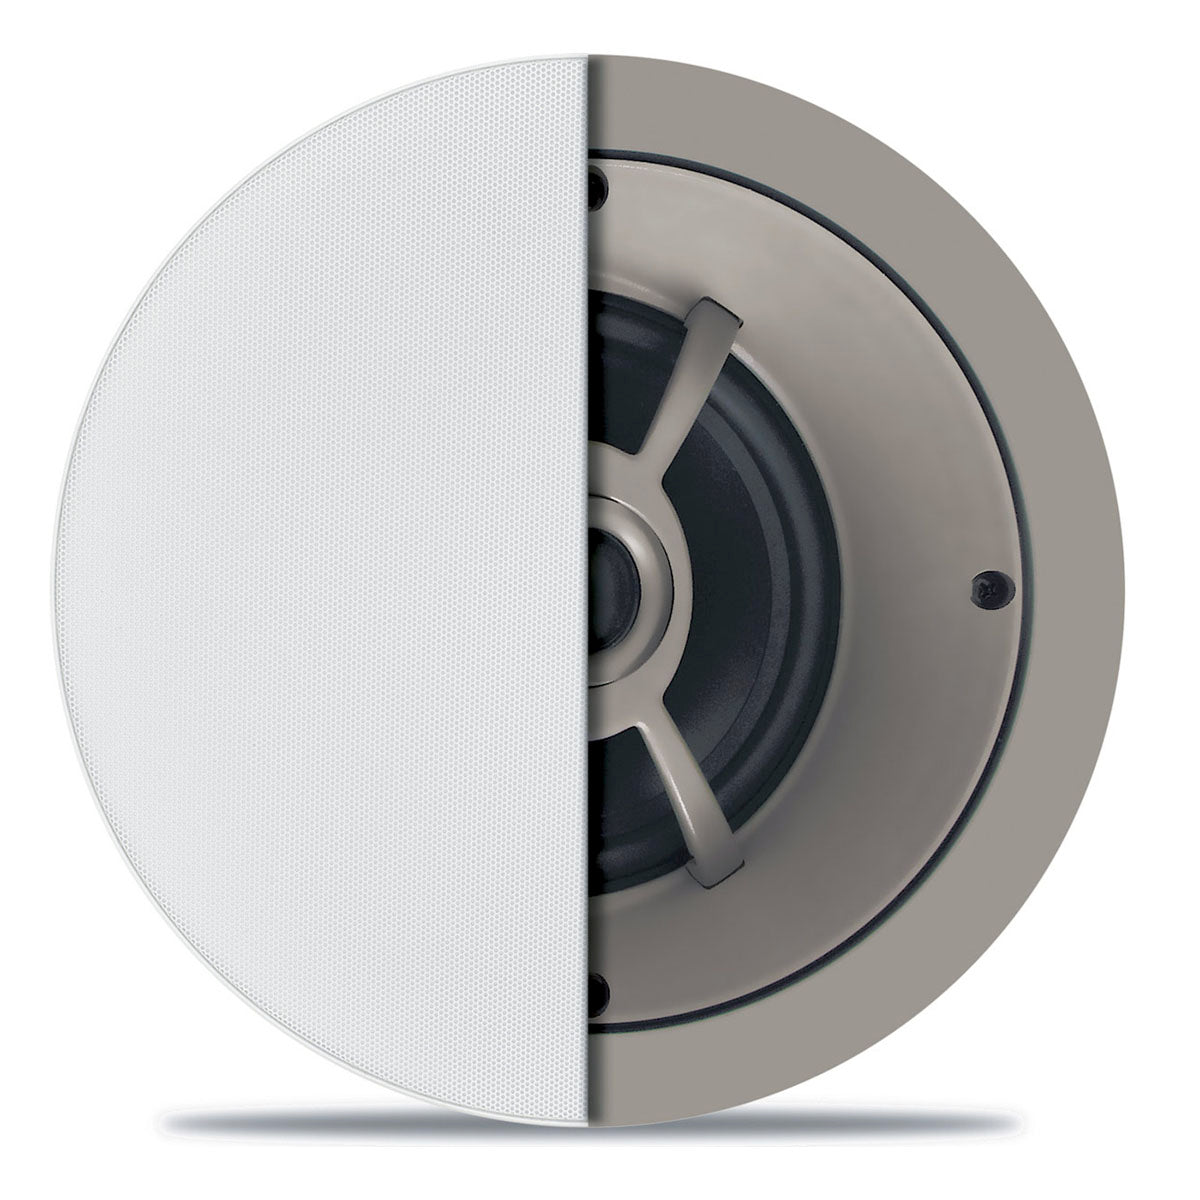 Proficient Audio Protege Series C651 6.5" LCR Inceiling Speaker - piece